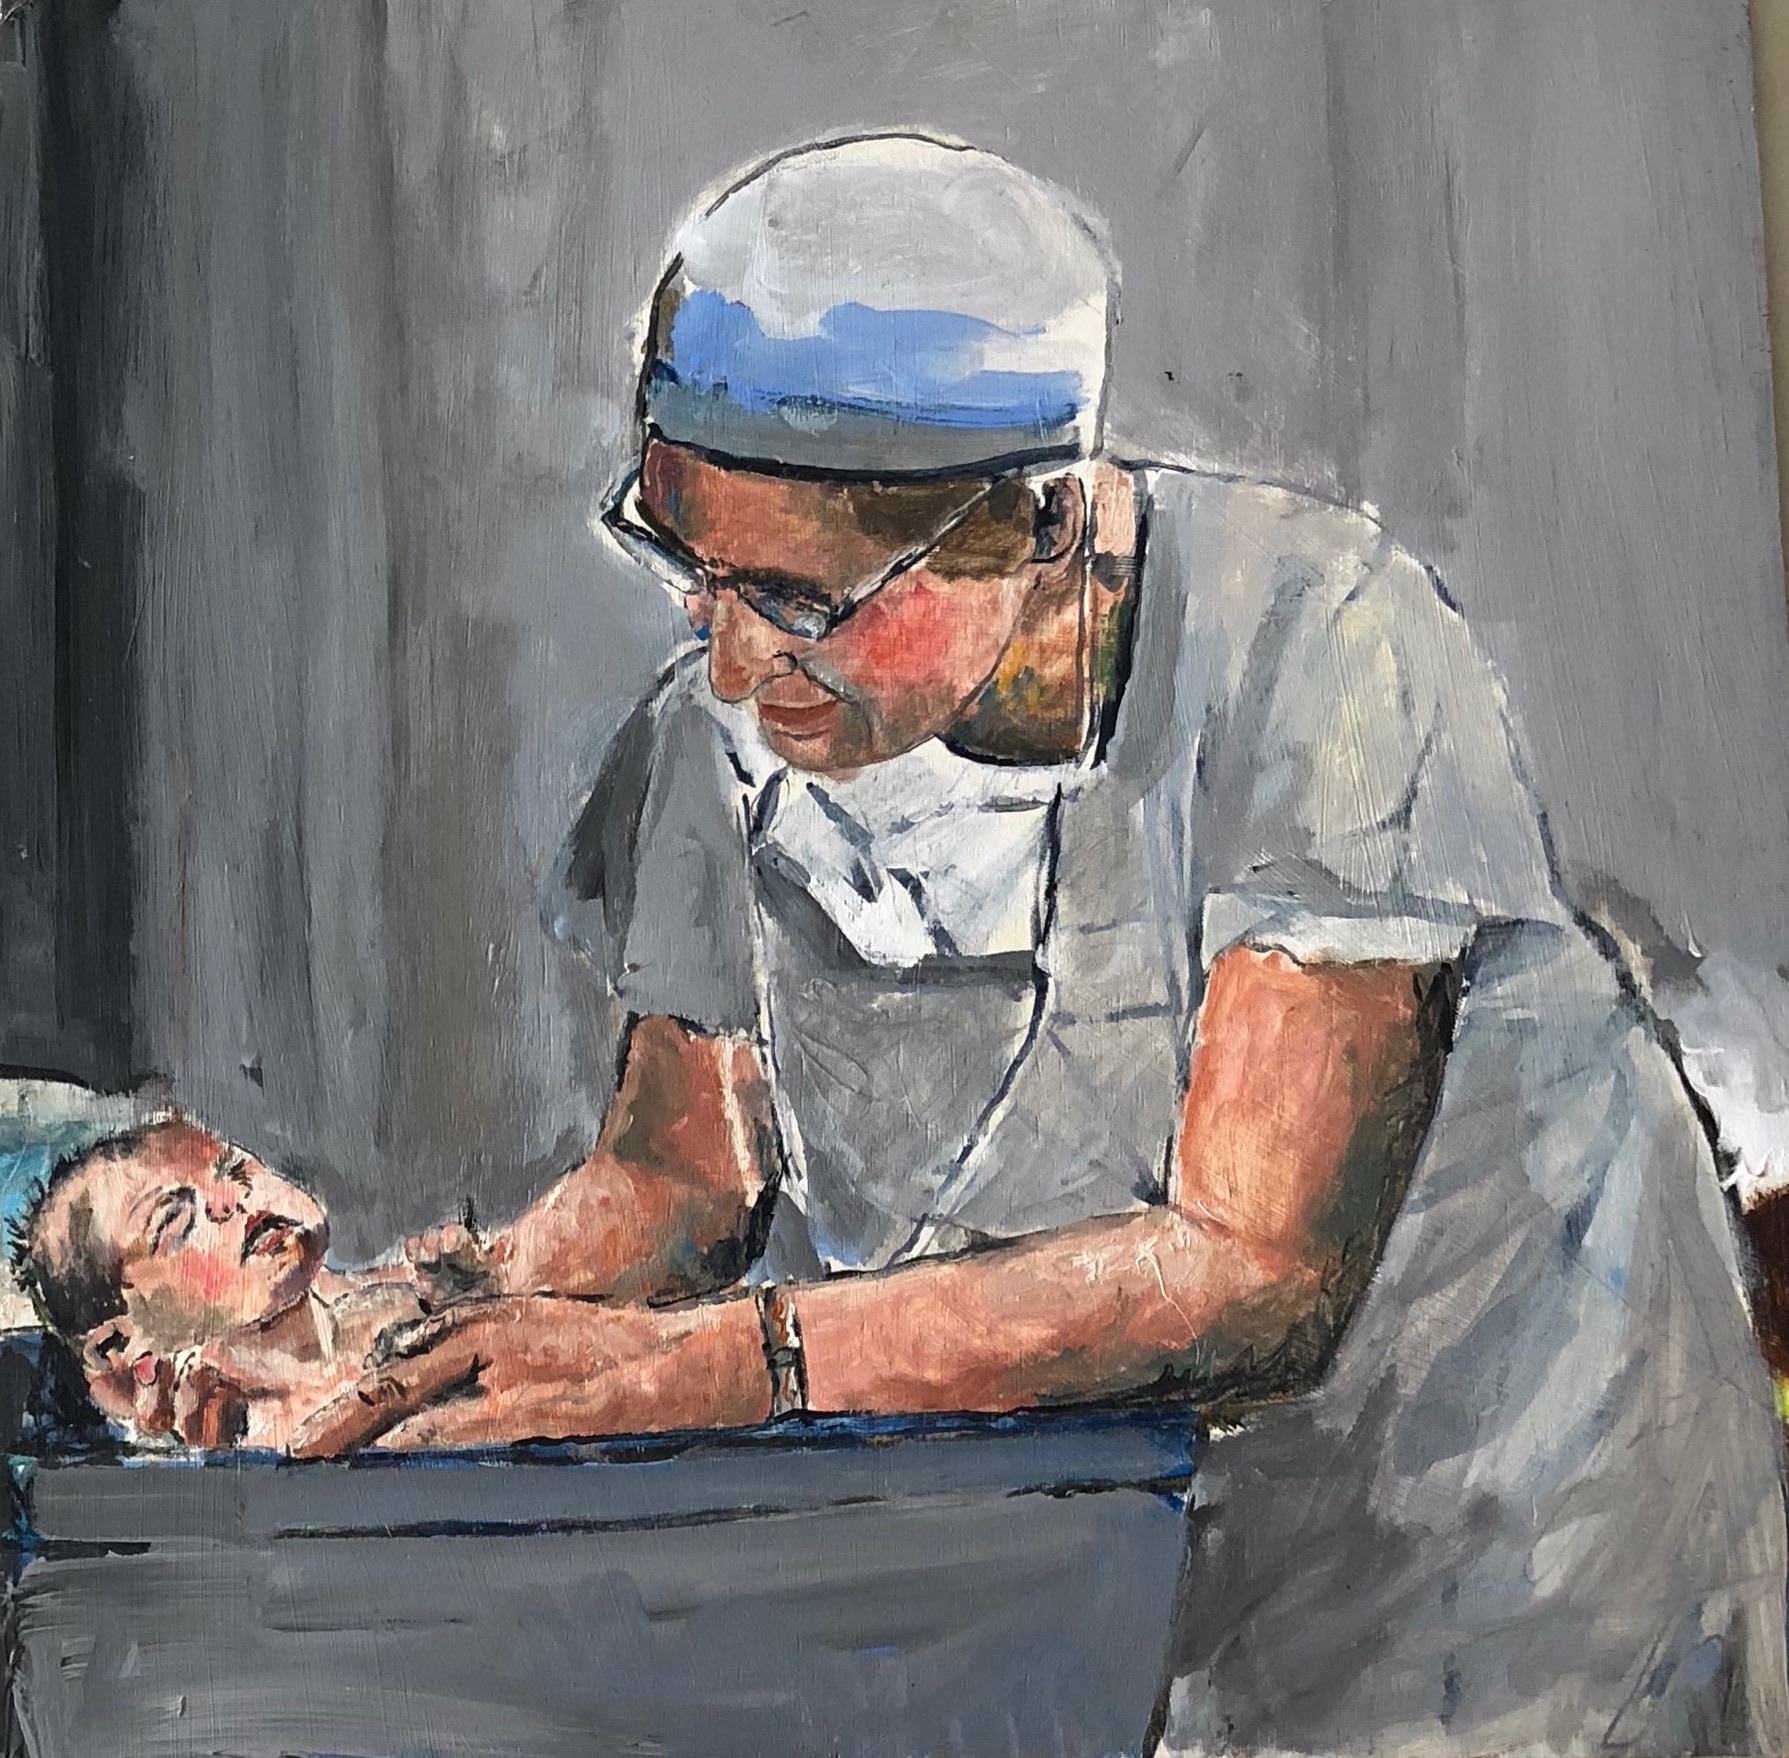 Virginia Apgar Obstetrician caring for new born